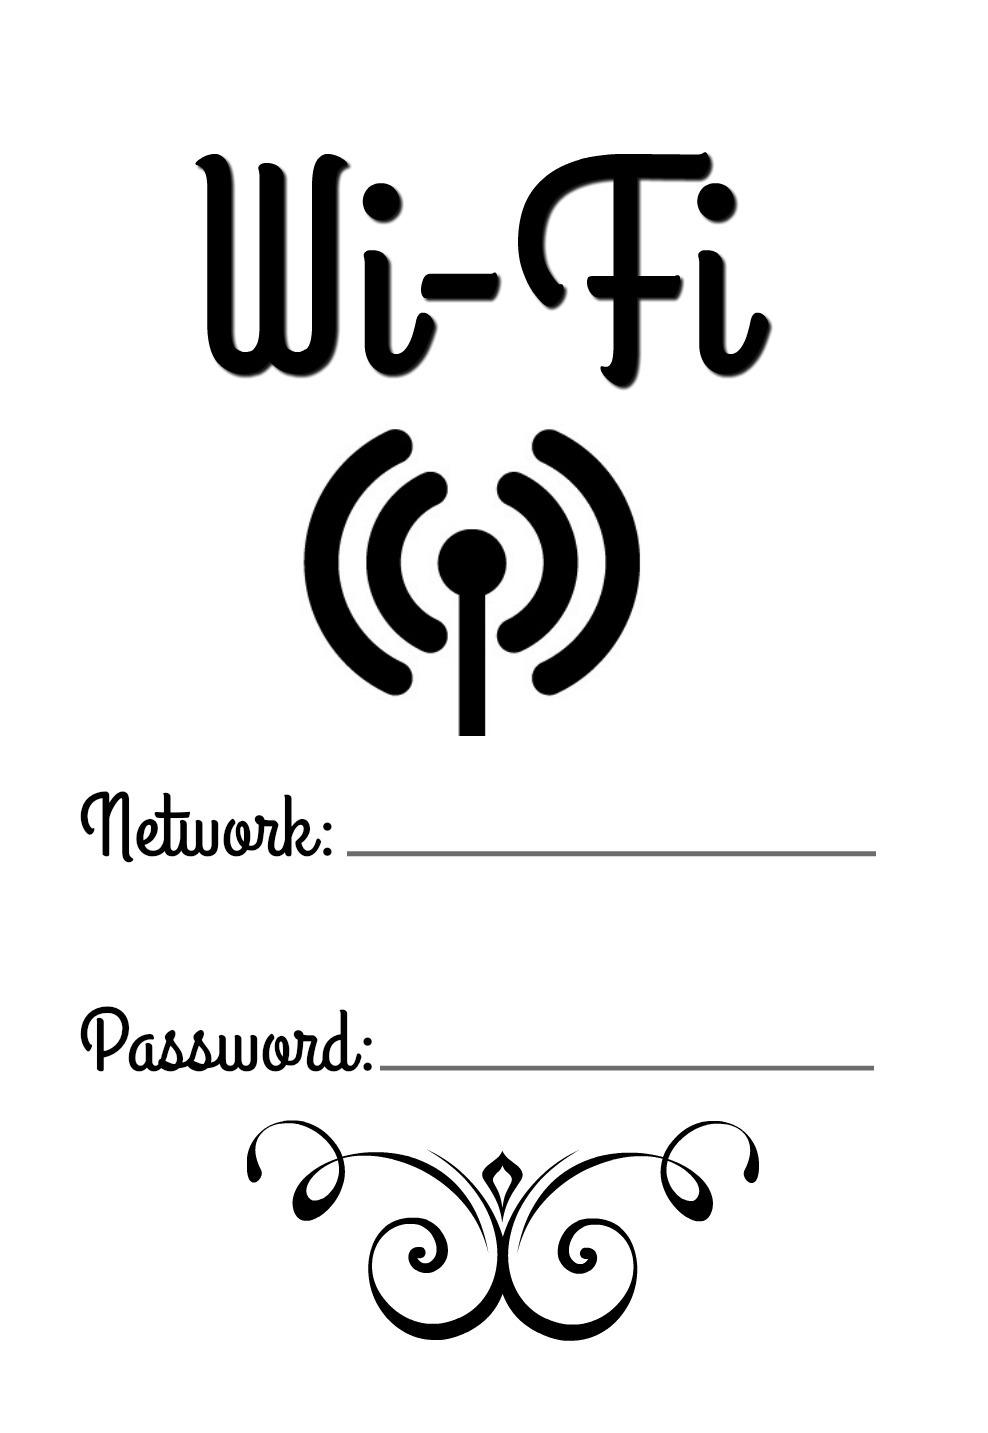 Skriv ut din Wi-Fi bild!